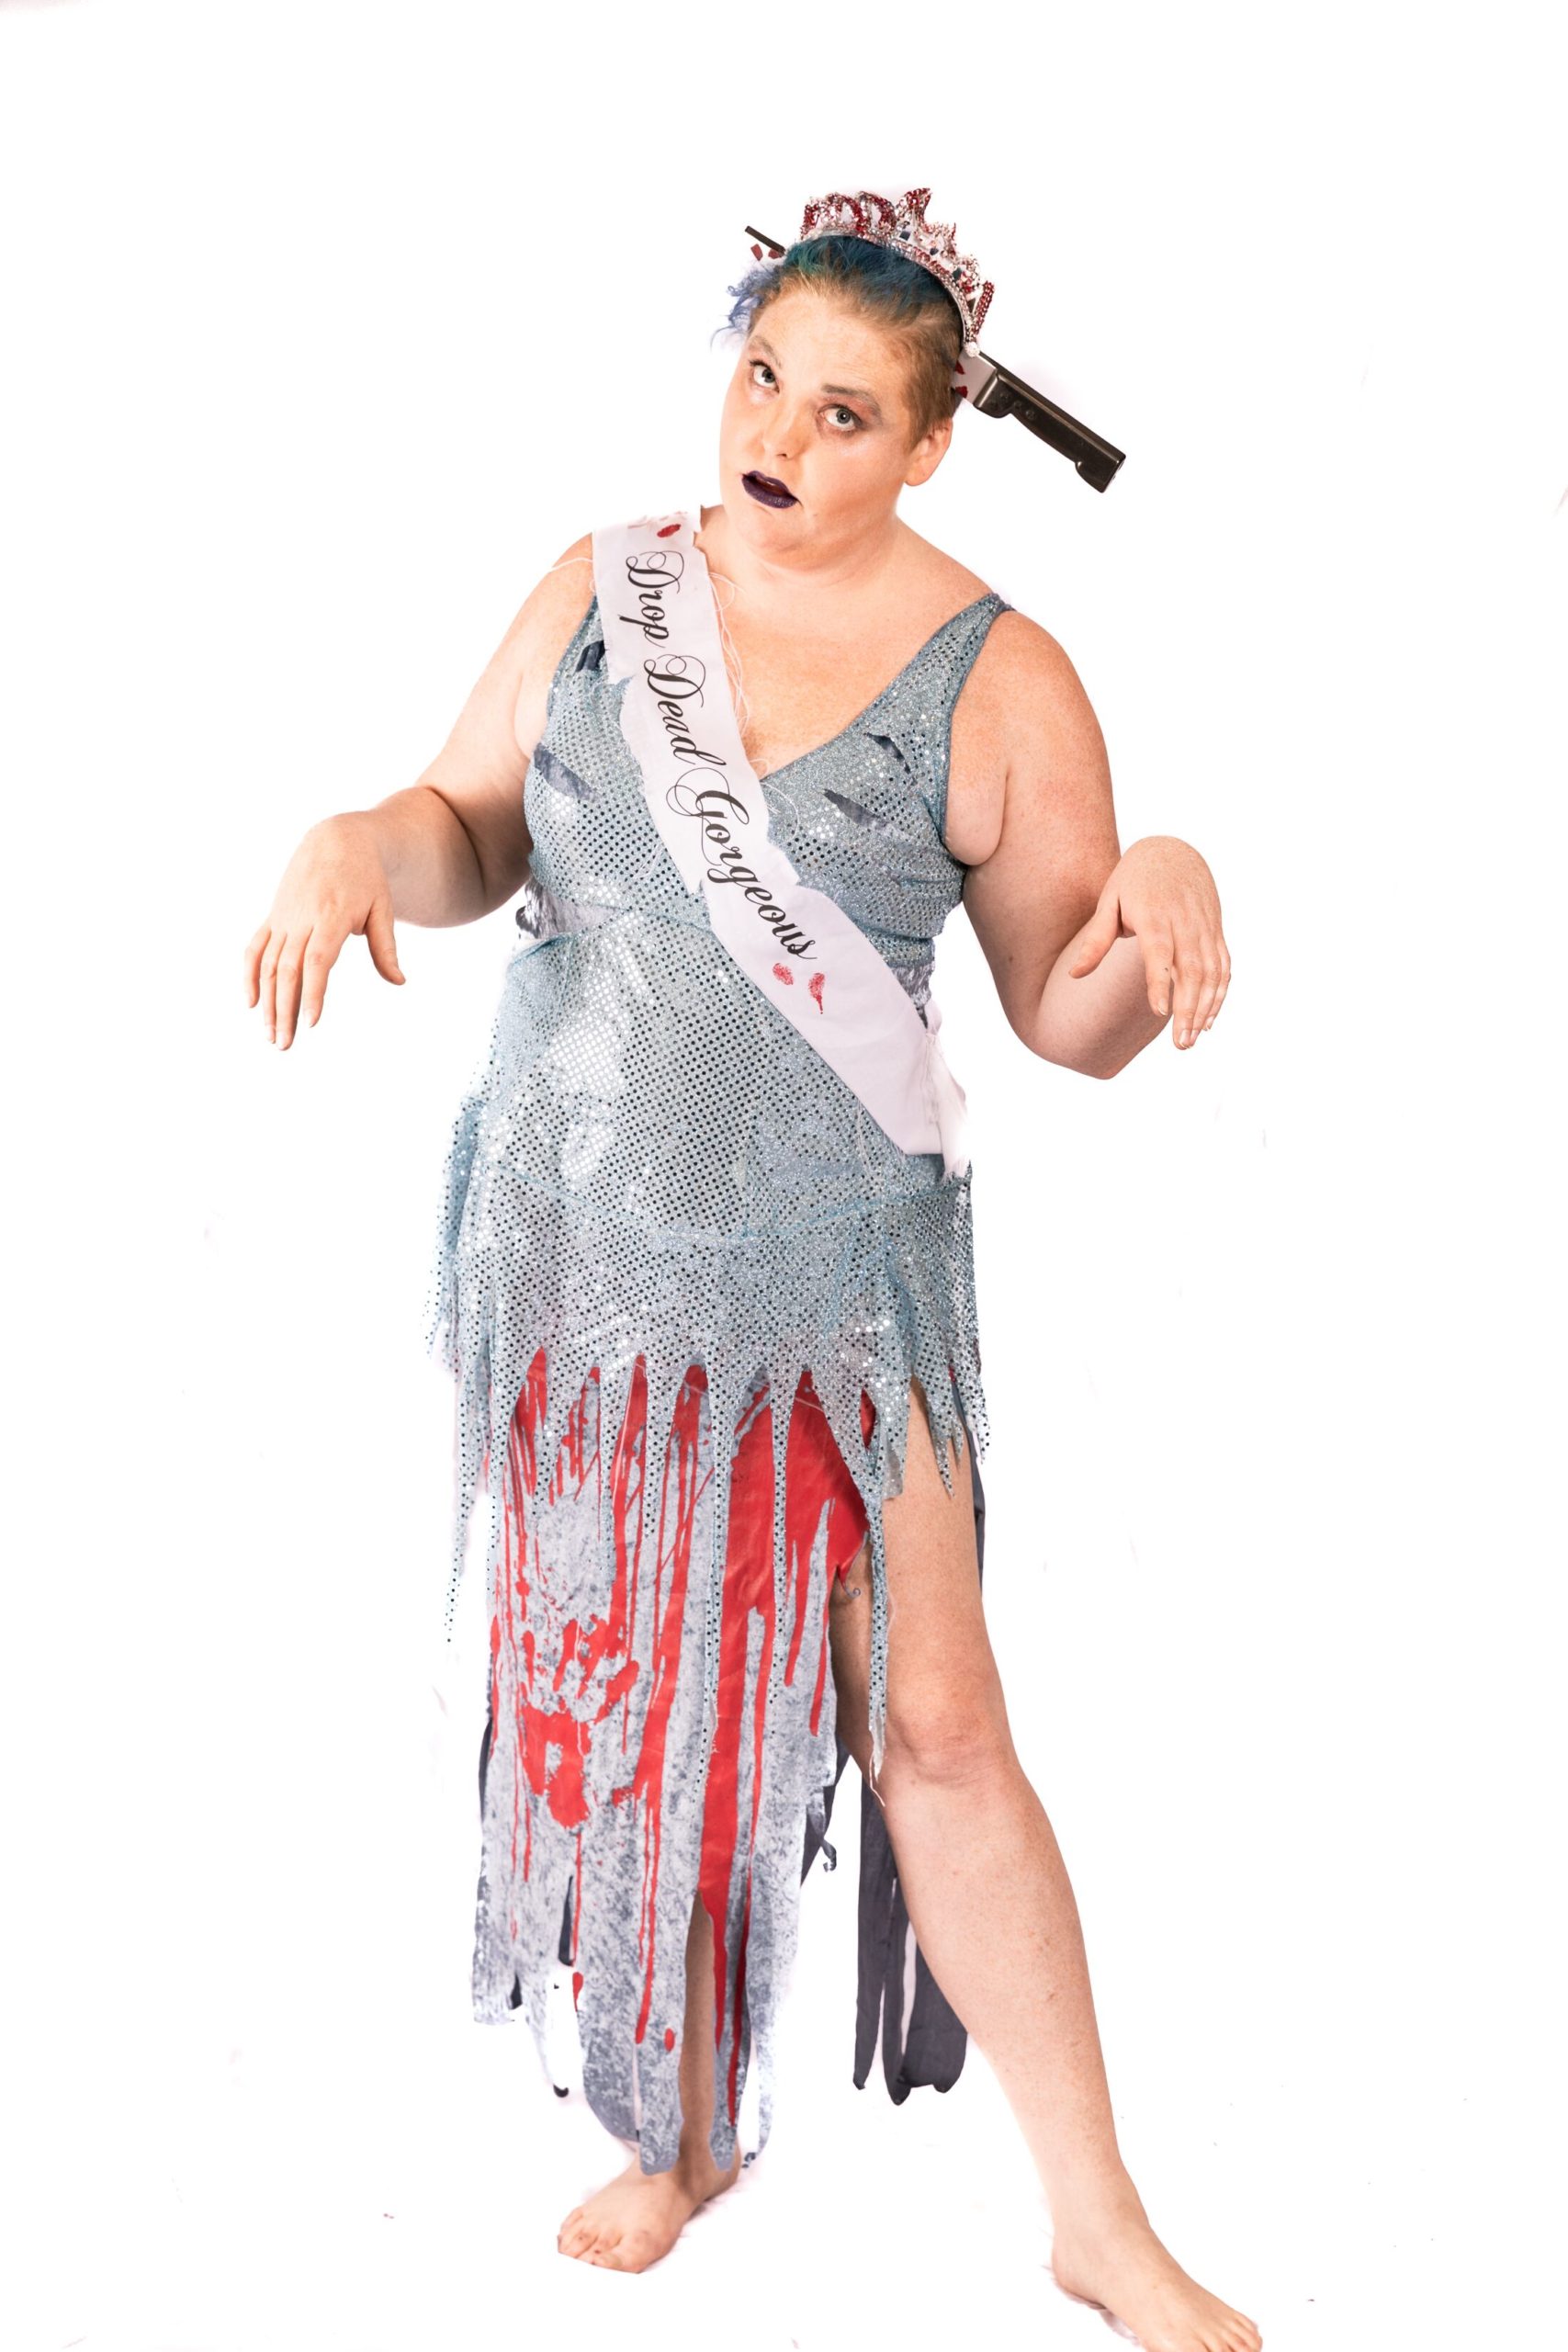 Zombie Prom Queen